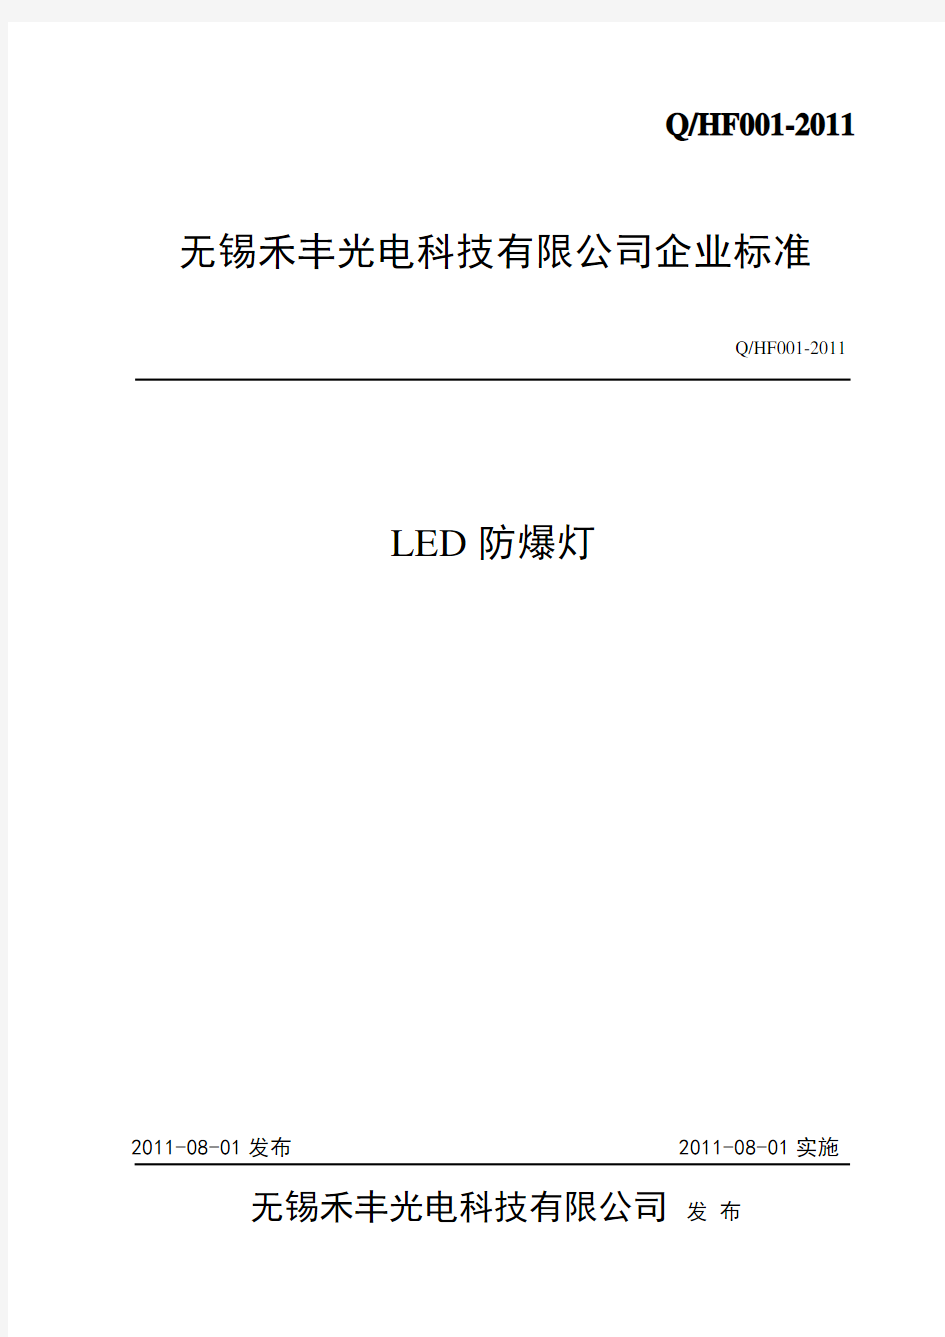 LED防爆灯企业标准